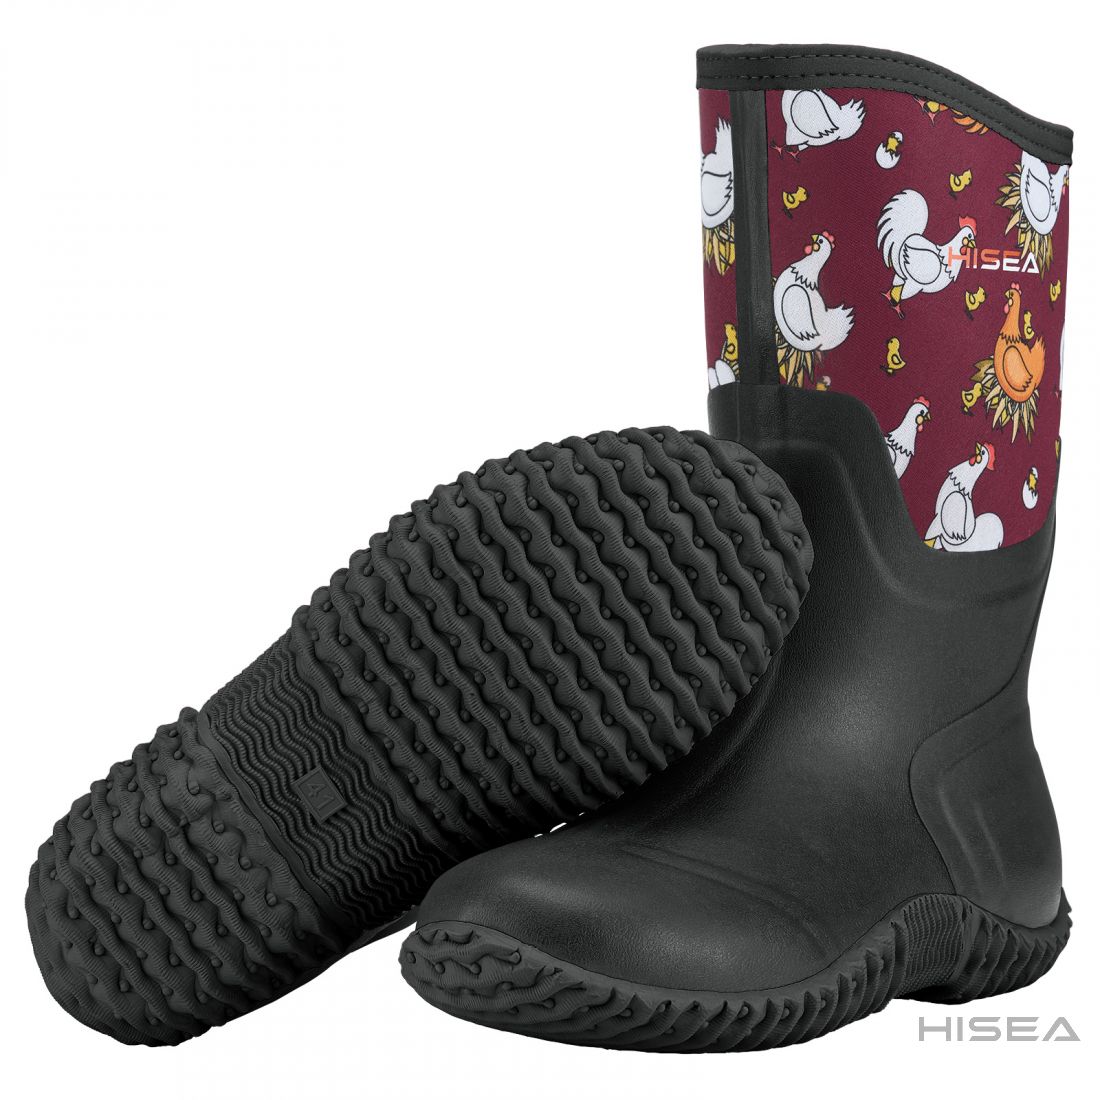 Women's Mid-Calf Casual Rain Boots